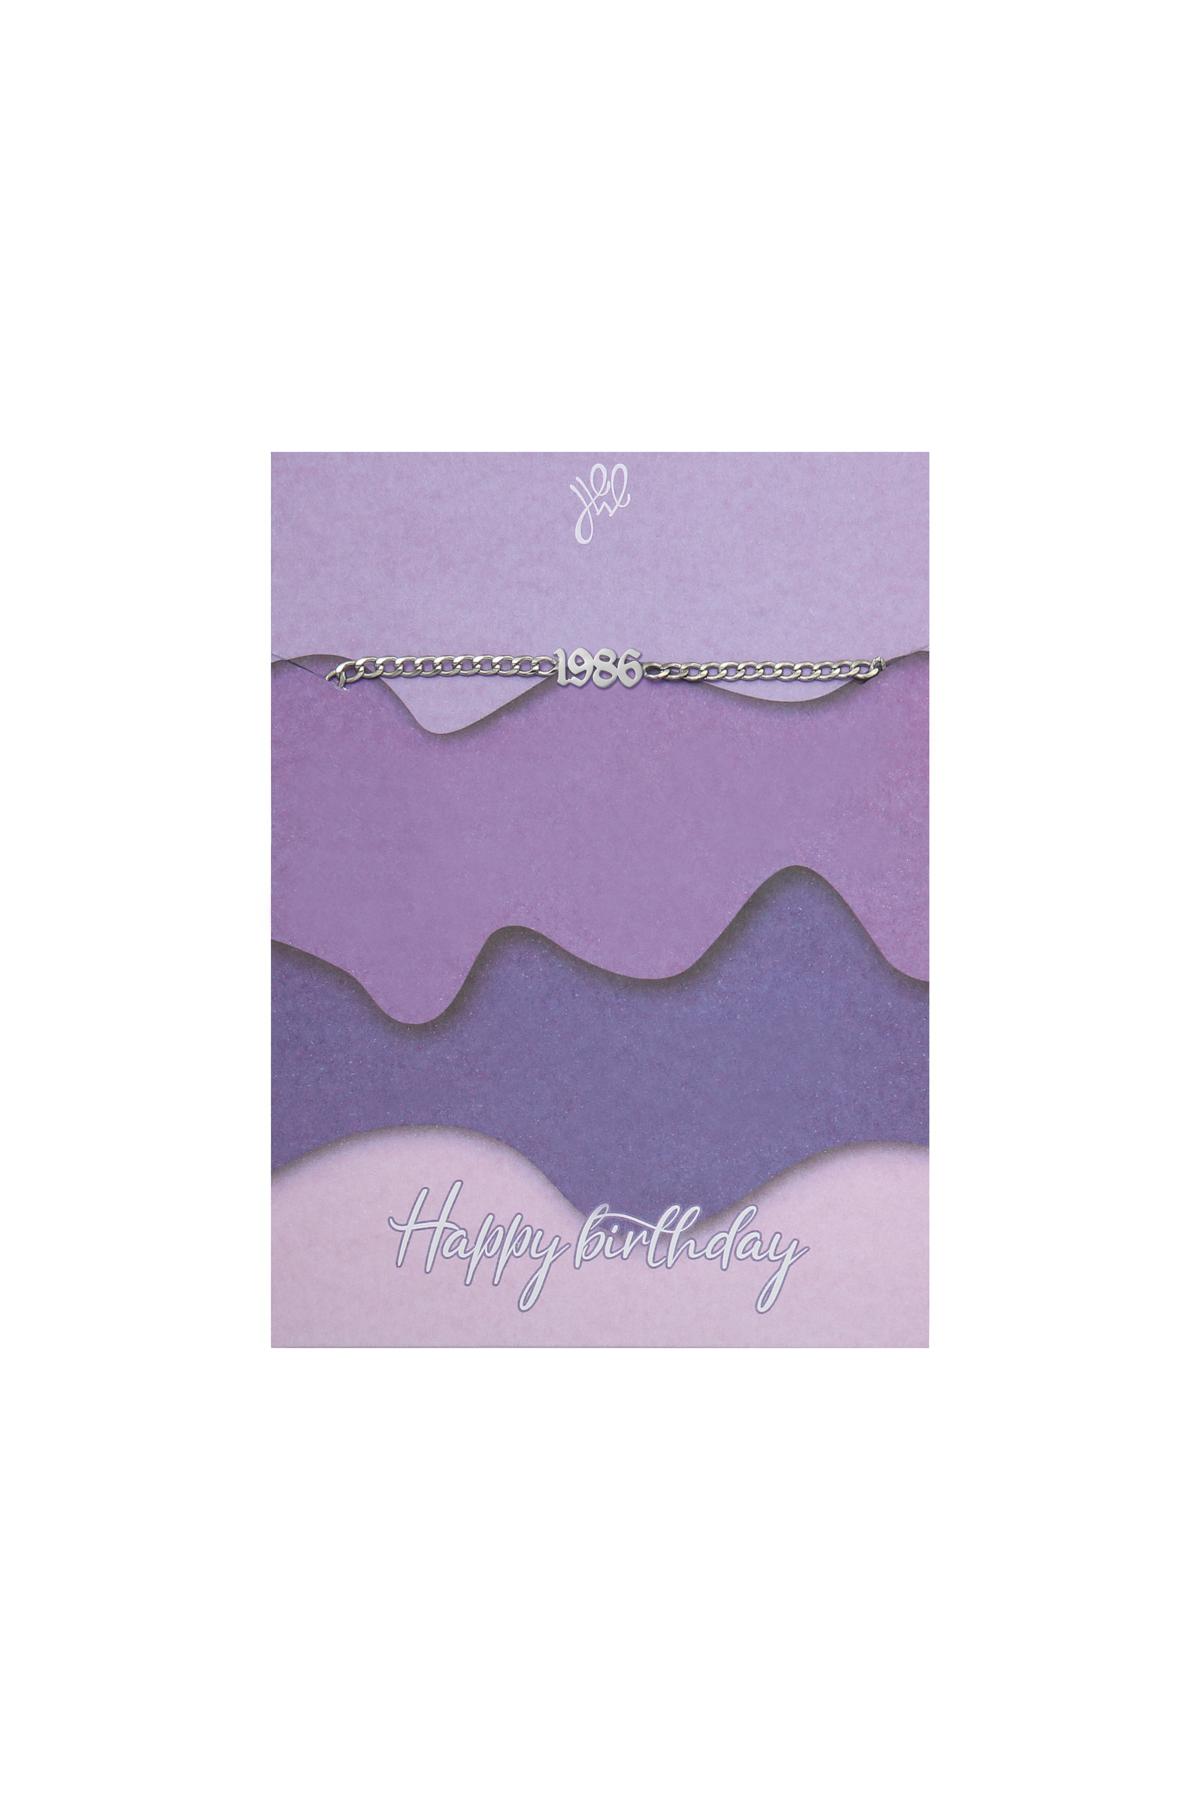 Bracelet Happy Birthday Years - 1986 Silver Stainless Steel